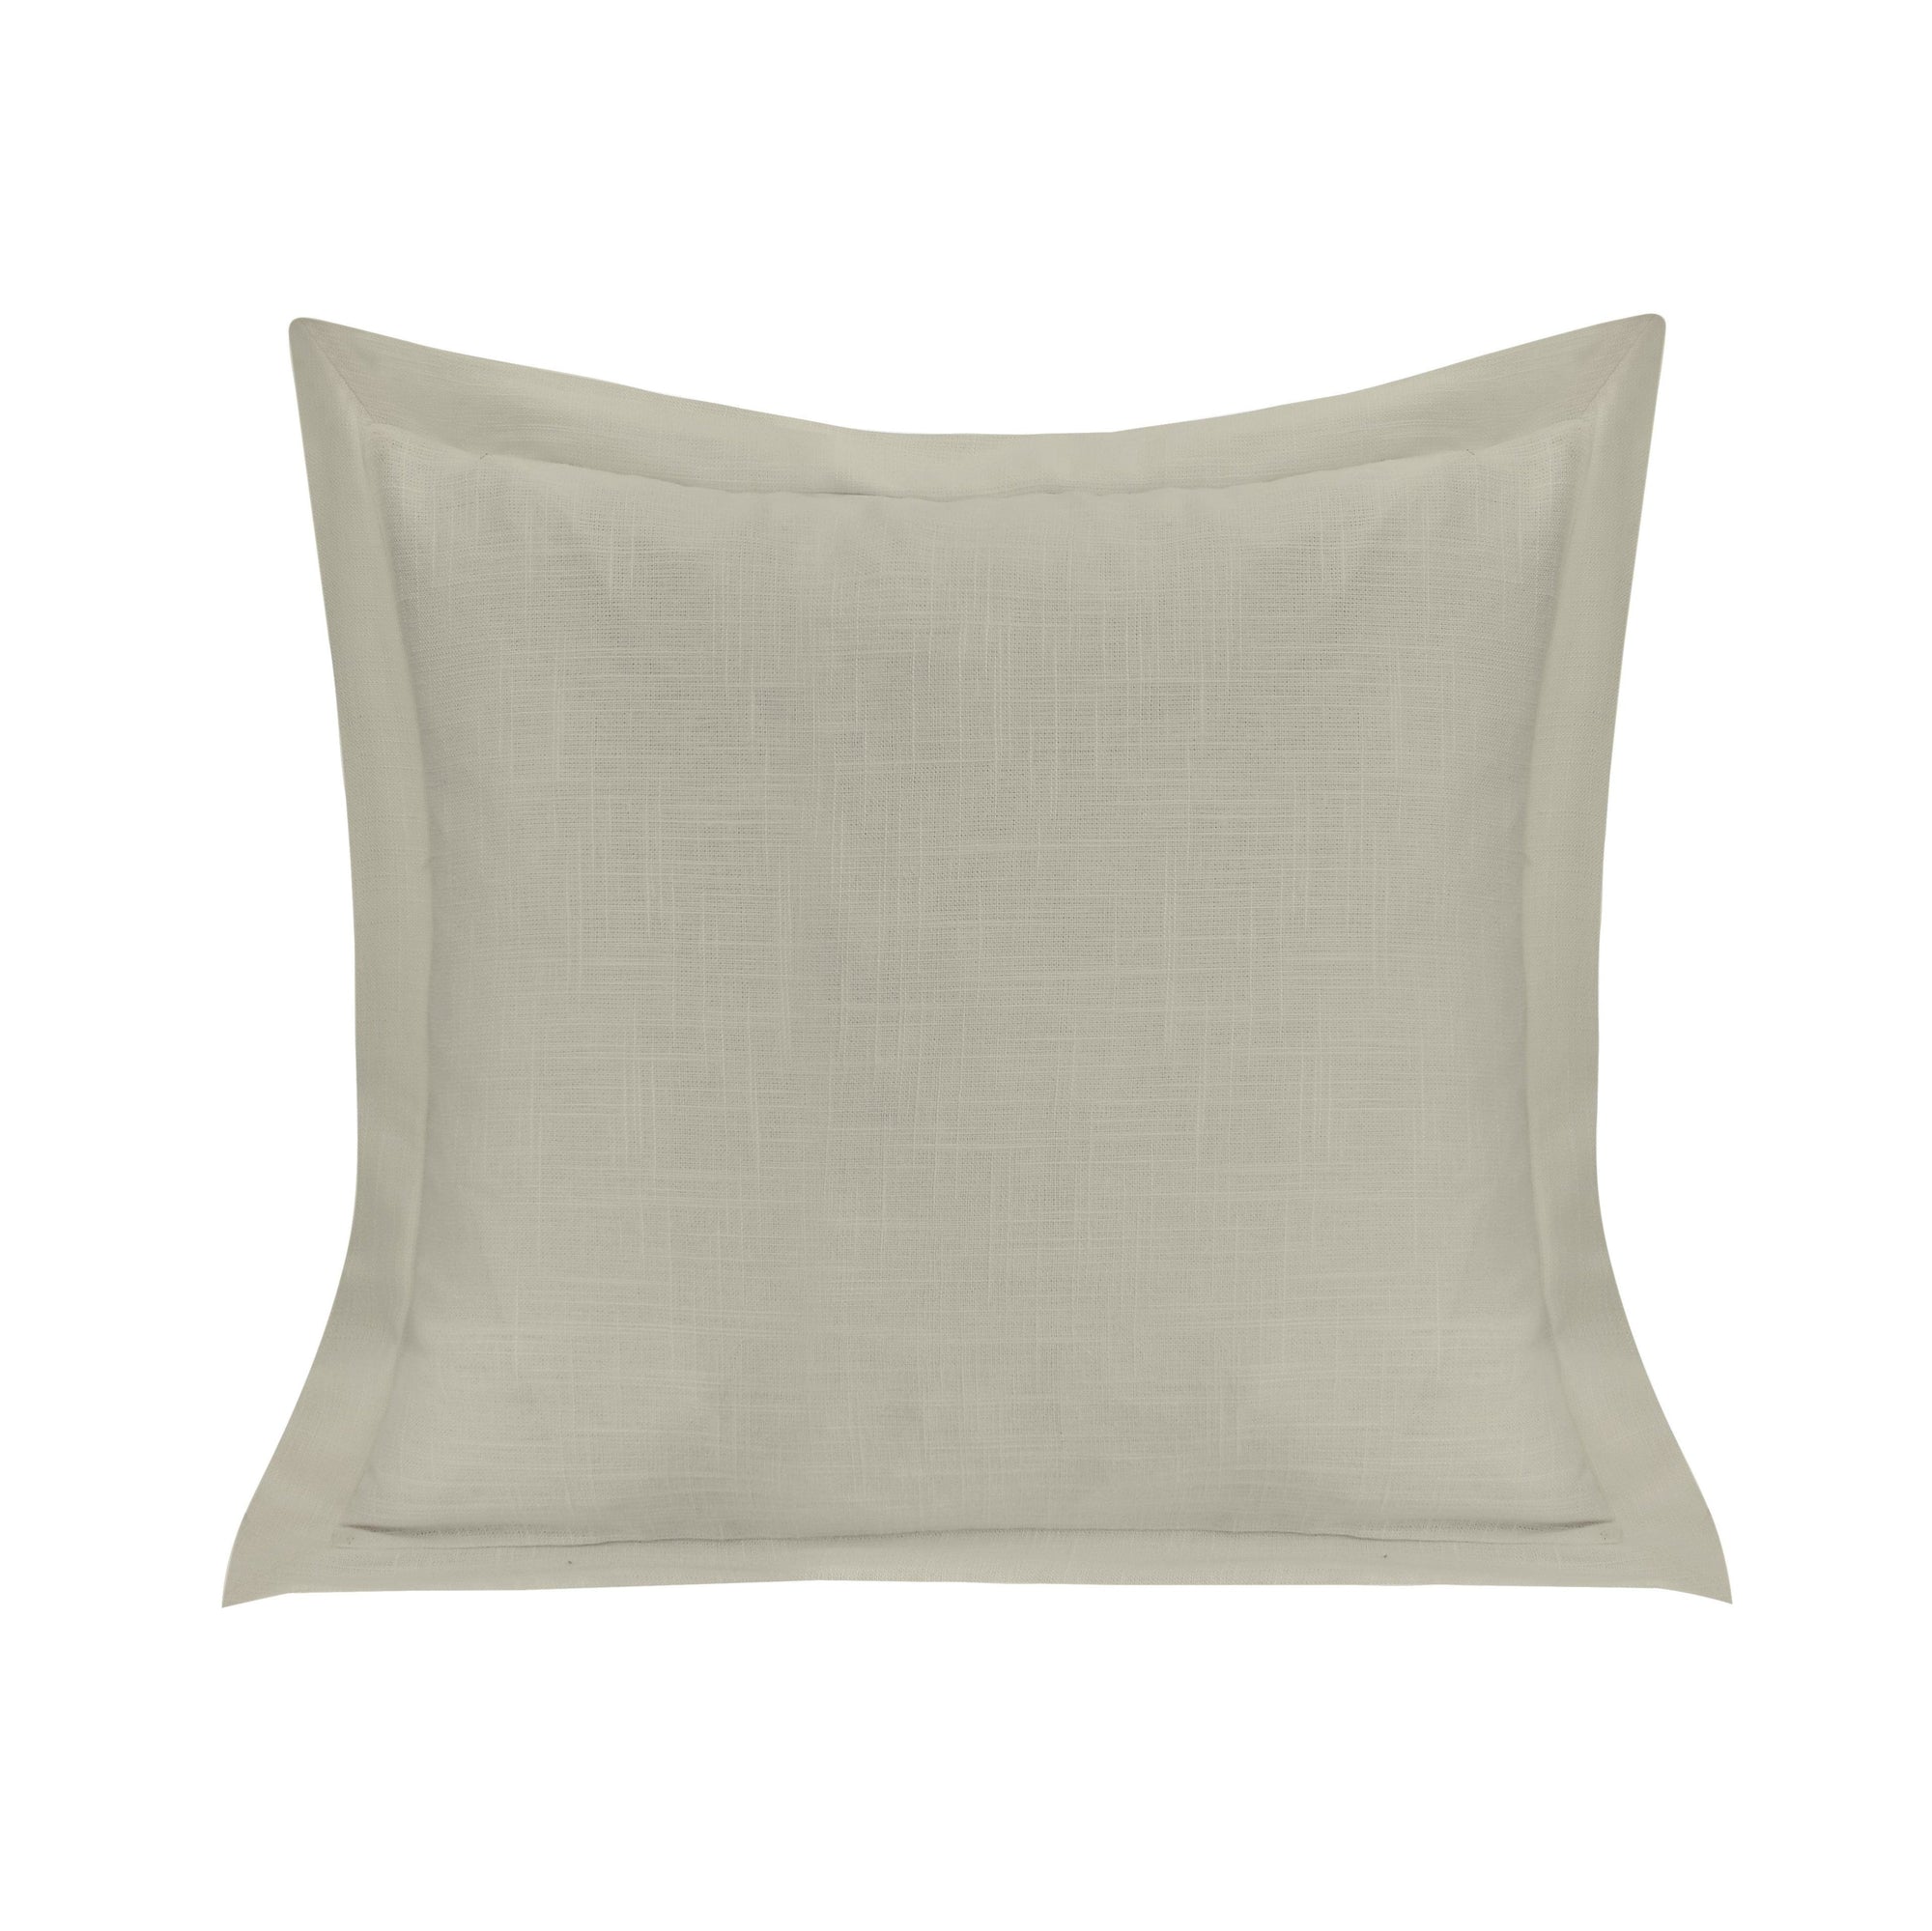 Single Flanged Washed Linen Pillow Light Tan Pillow